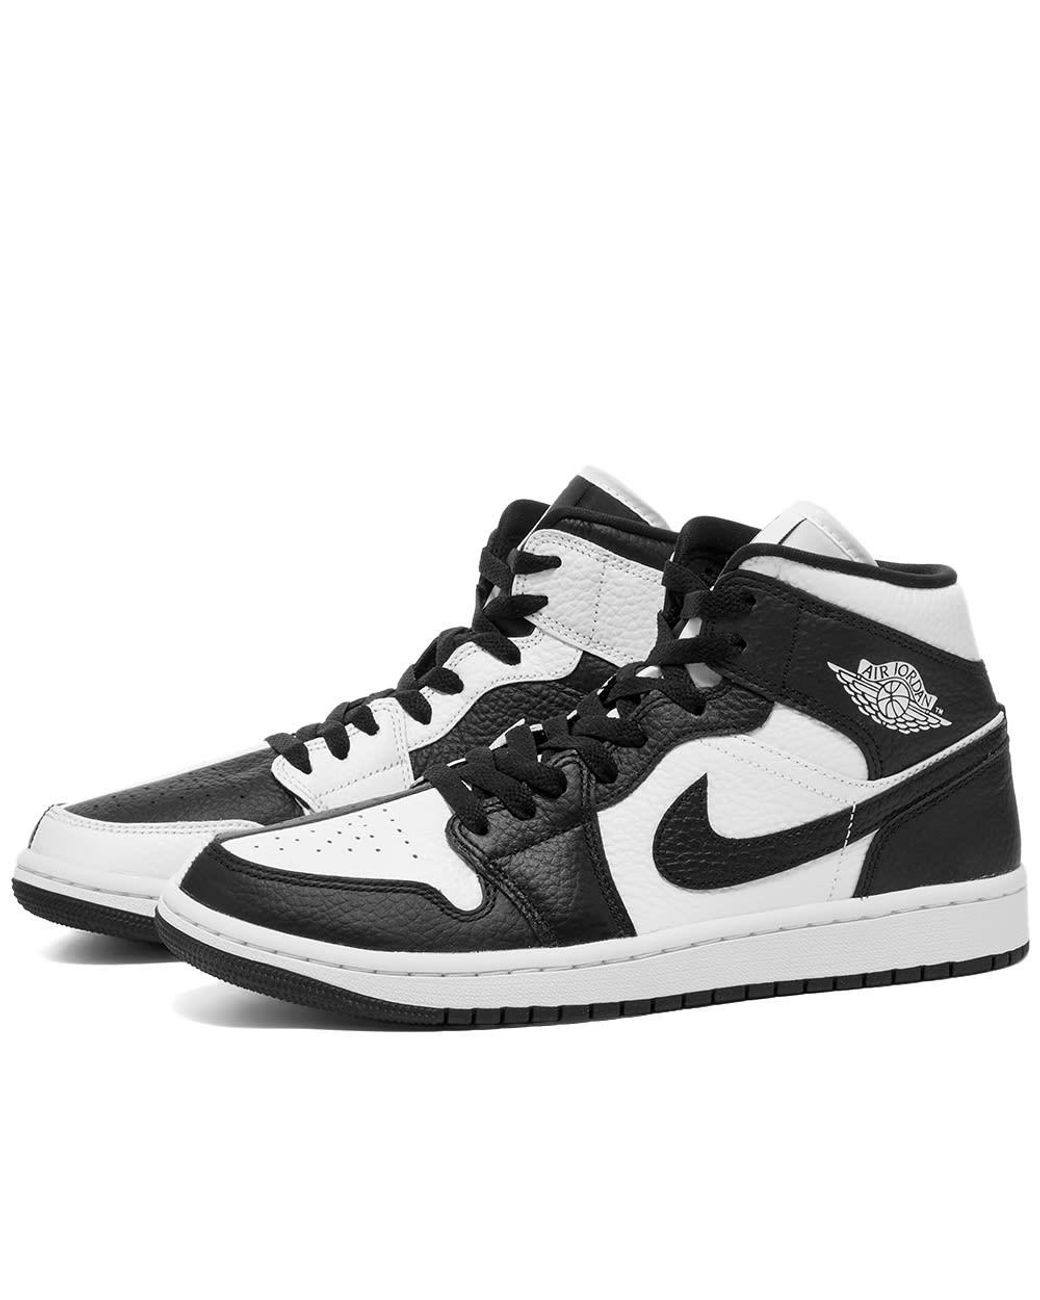 Nike Leather Air Jordan 1 Mid Se Edge Sneakers in Black/White (Black ...